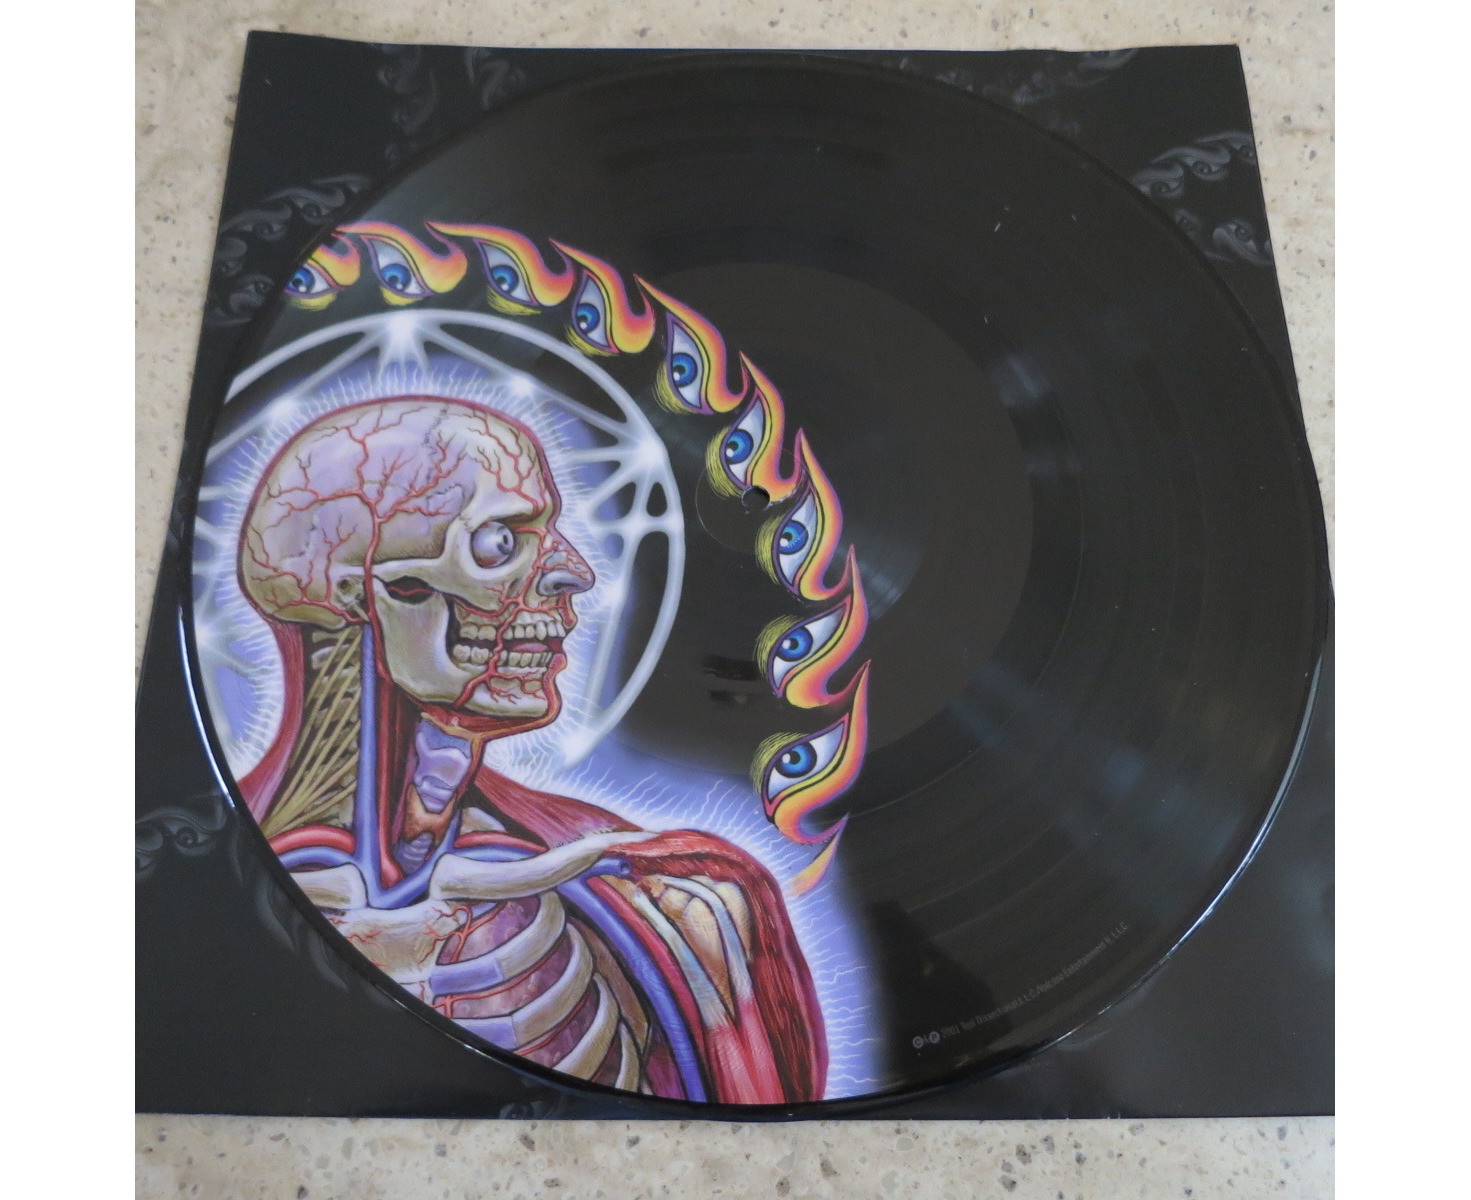 Tool Lateralus (Picture Disc Vinyl) (2 Lp's) Vinyl 